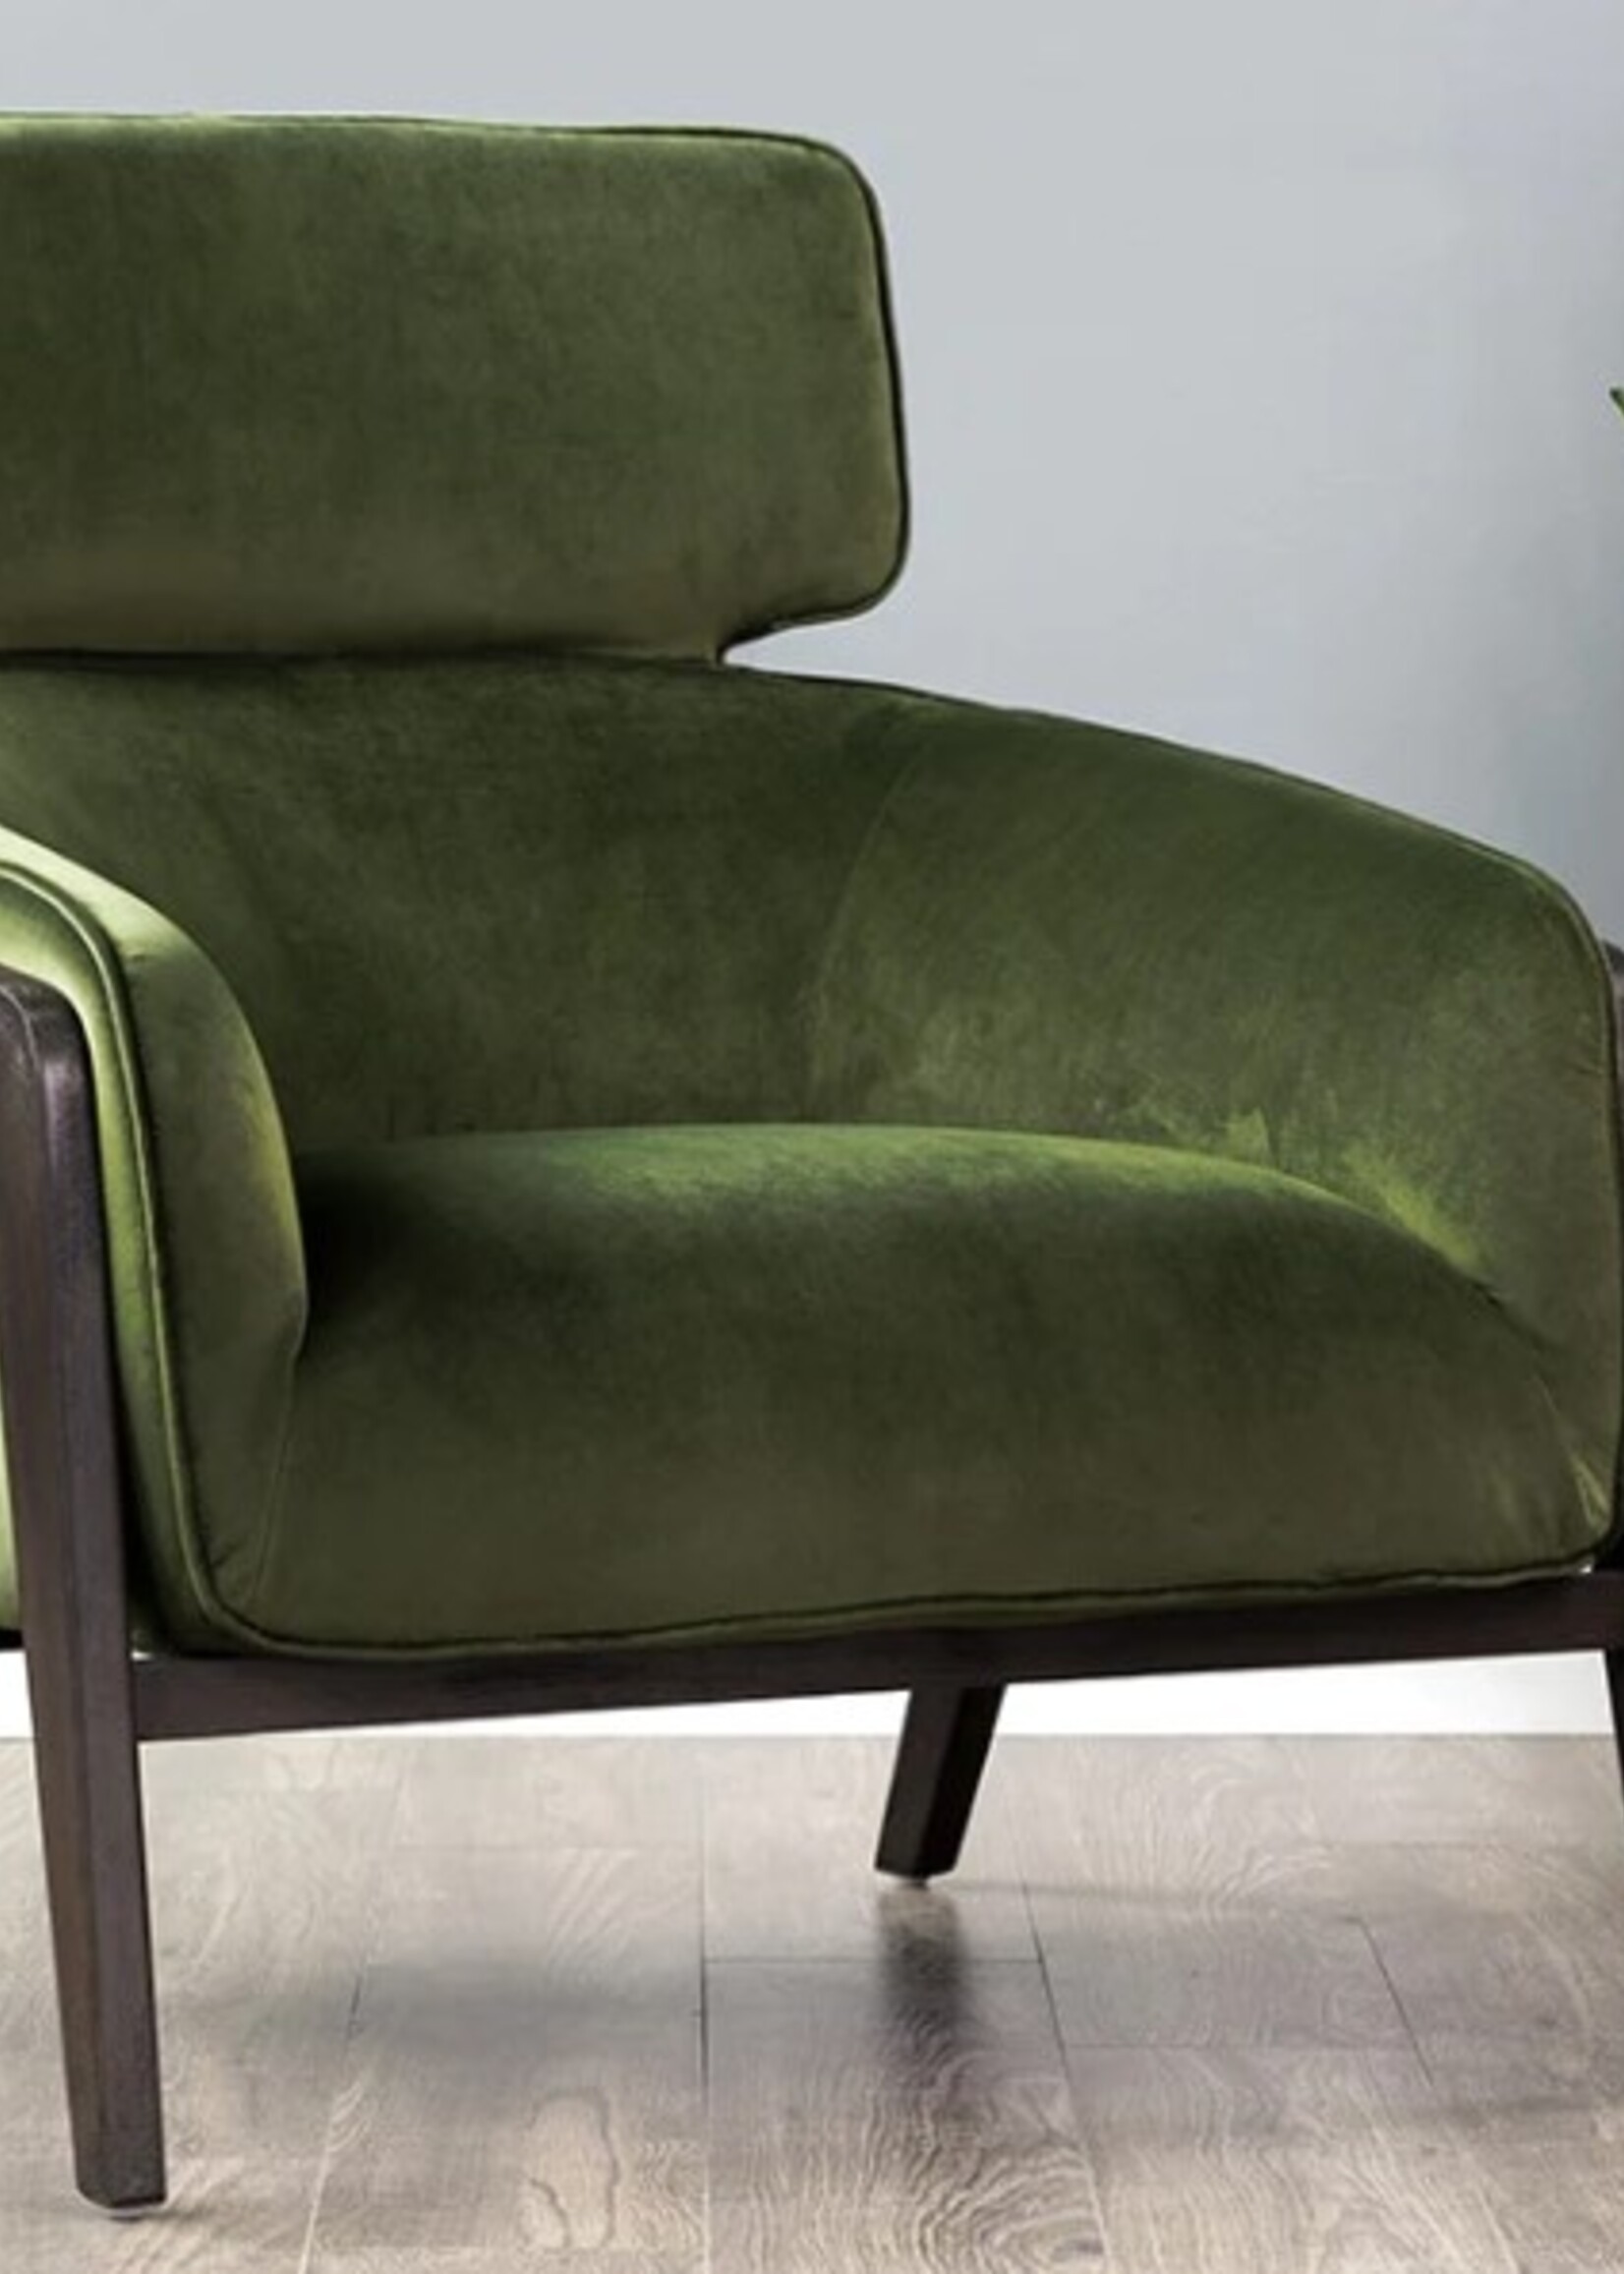 Sunpan Maximus Lounge Chair * Moss Green & Dark Wood